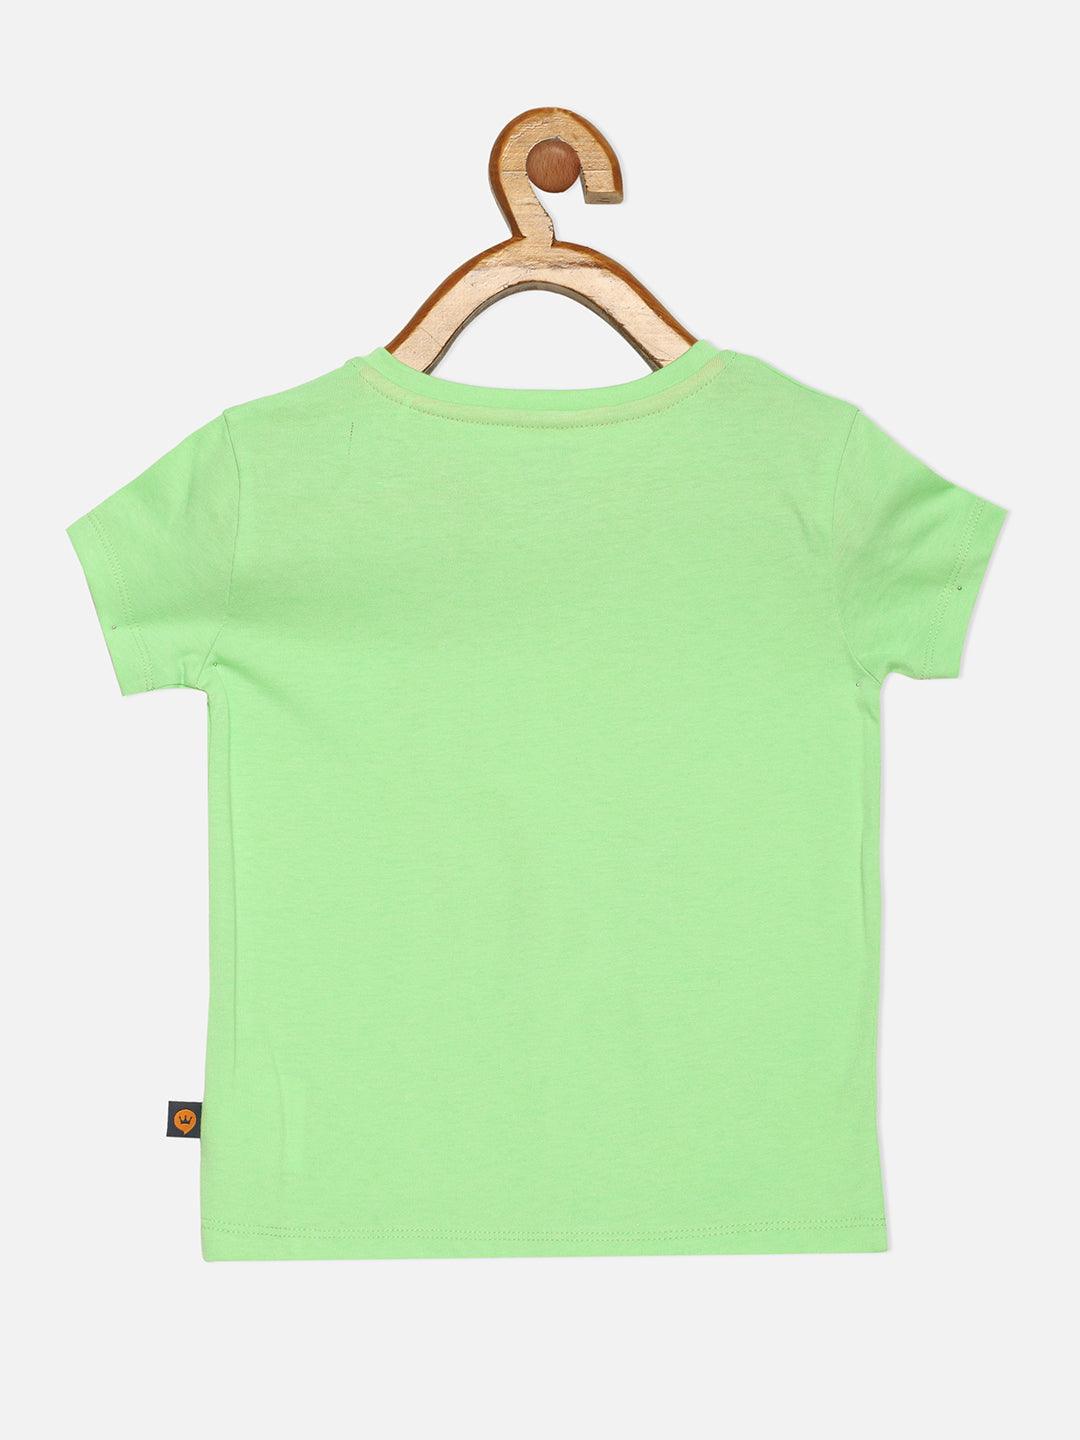 Girls cotton green printed casual round neck T-Shirt - Lagorii Kids